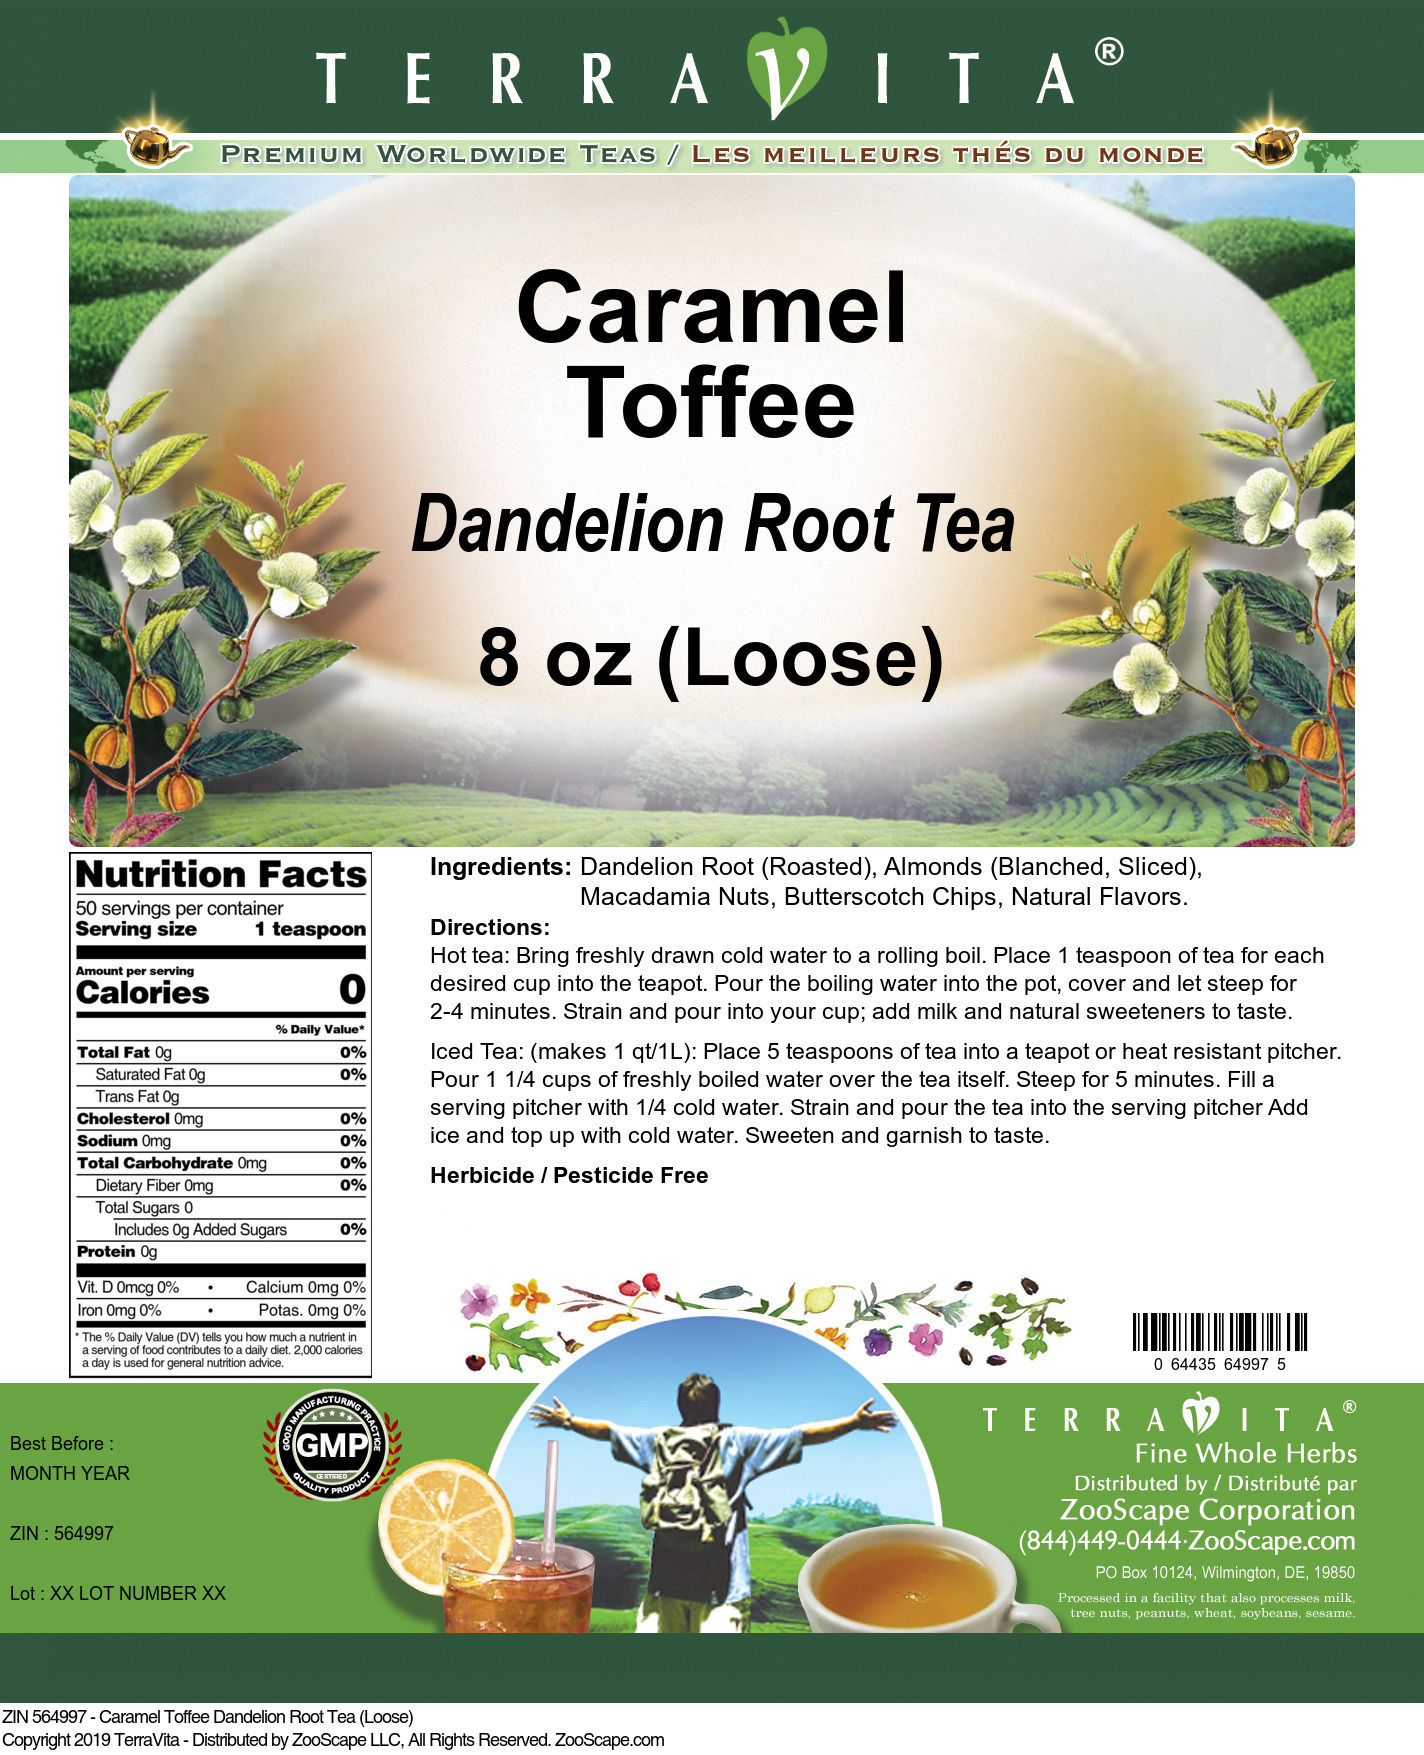 Caramel Toffee Dandelion Root Tea (Loose) - Label